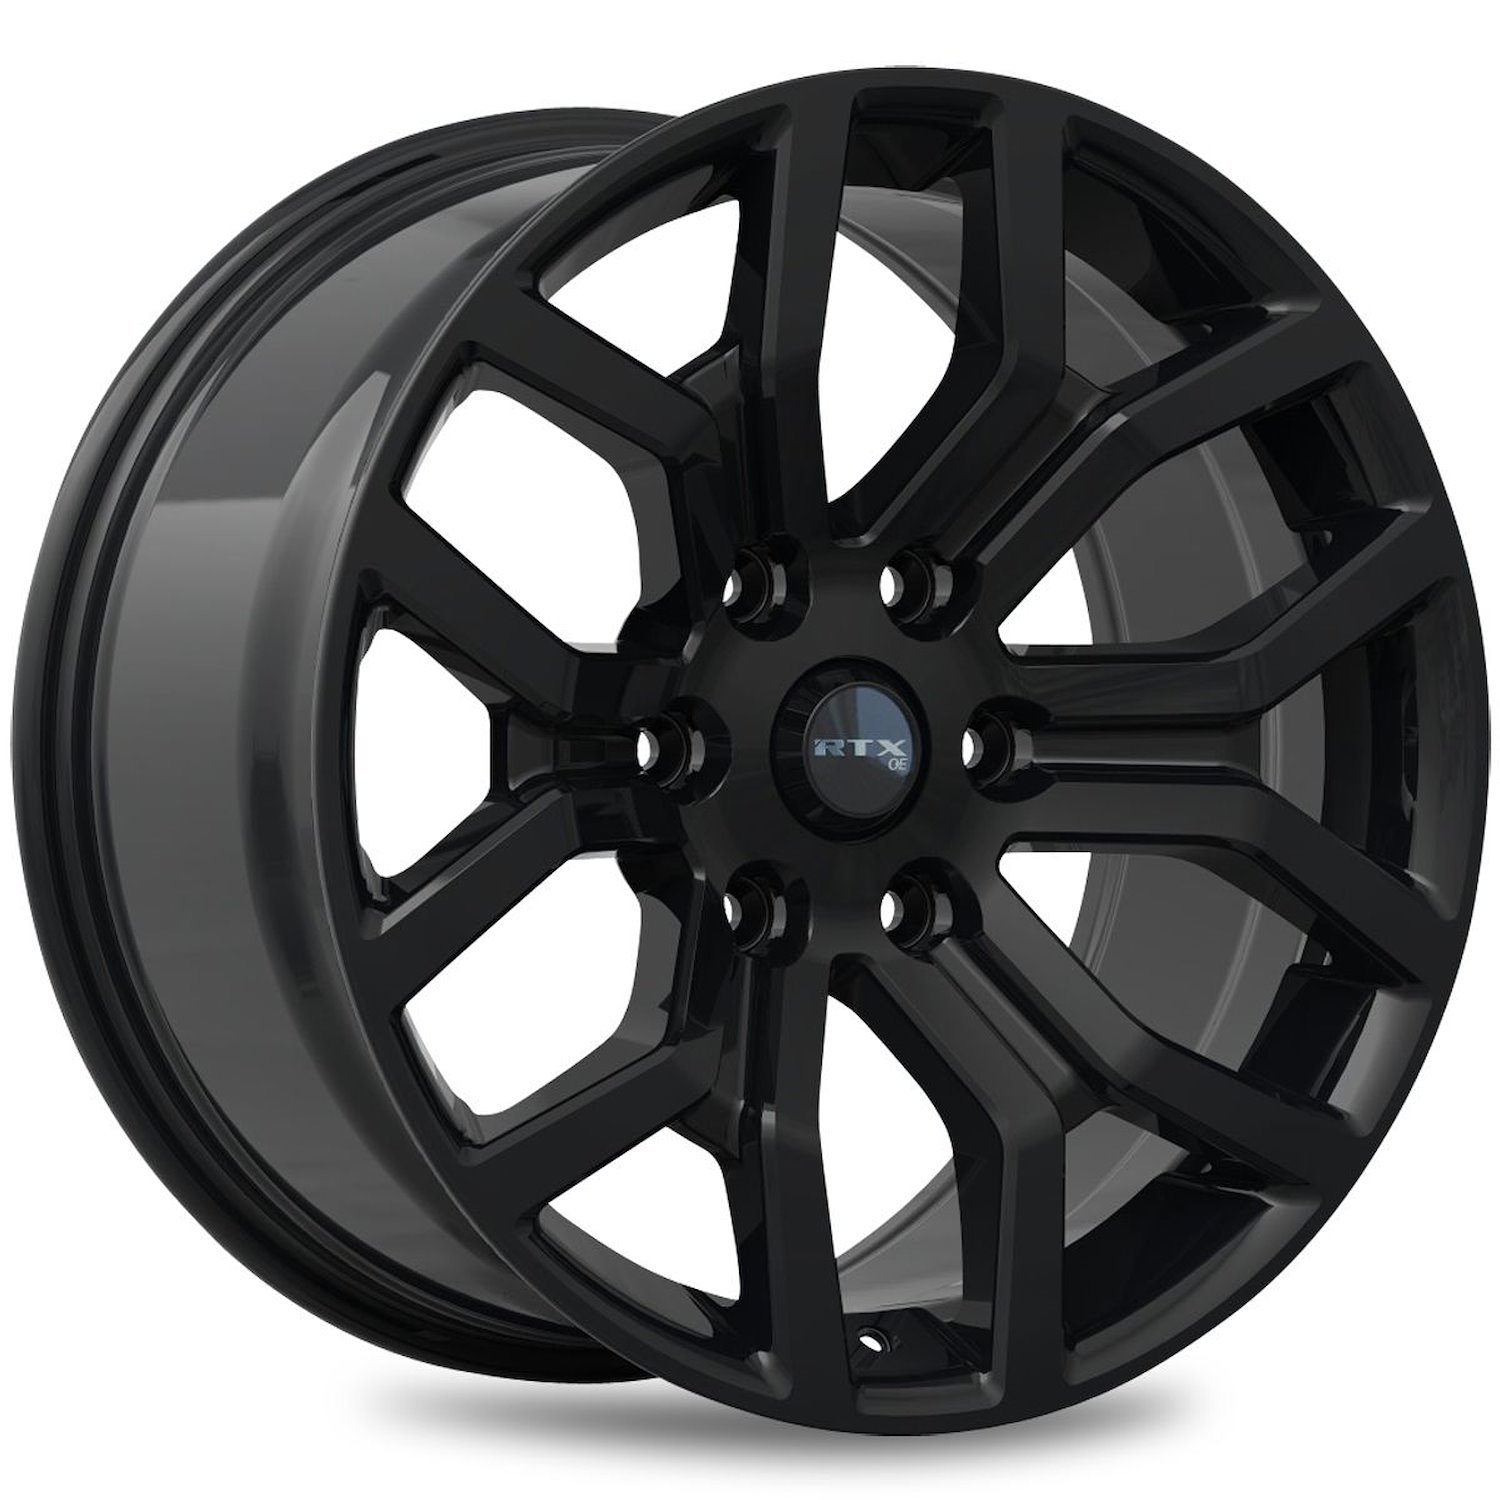 083208 OE-Series FD-01 Wheel [Size: 18" x 9"] Gloss Black Finish